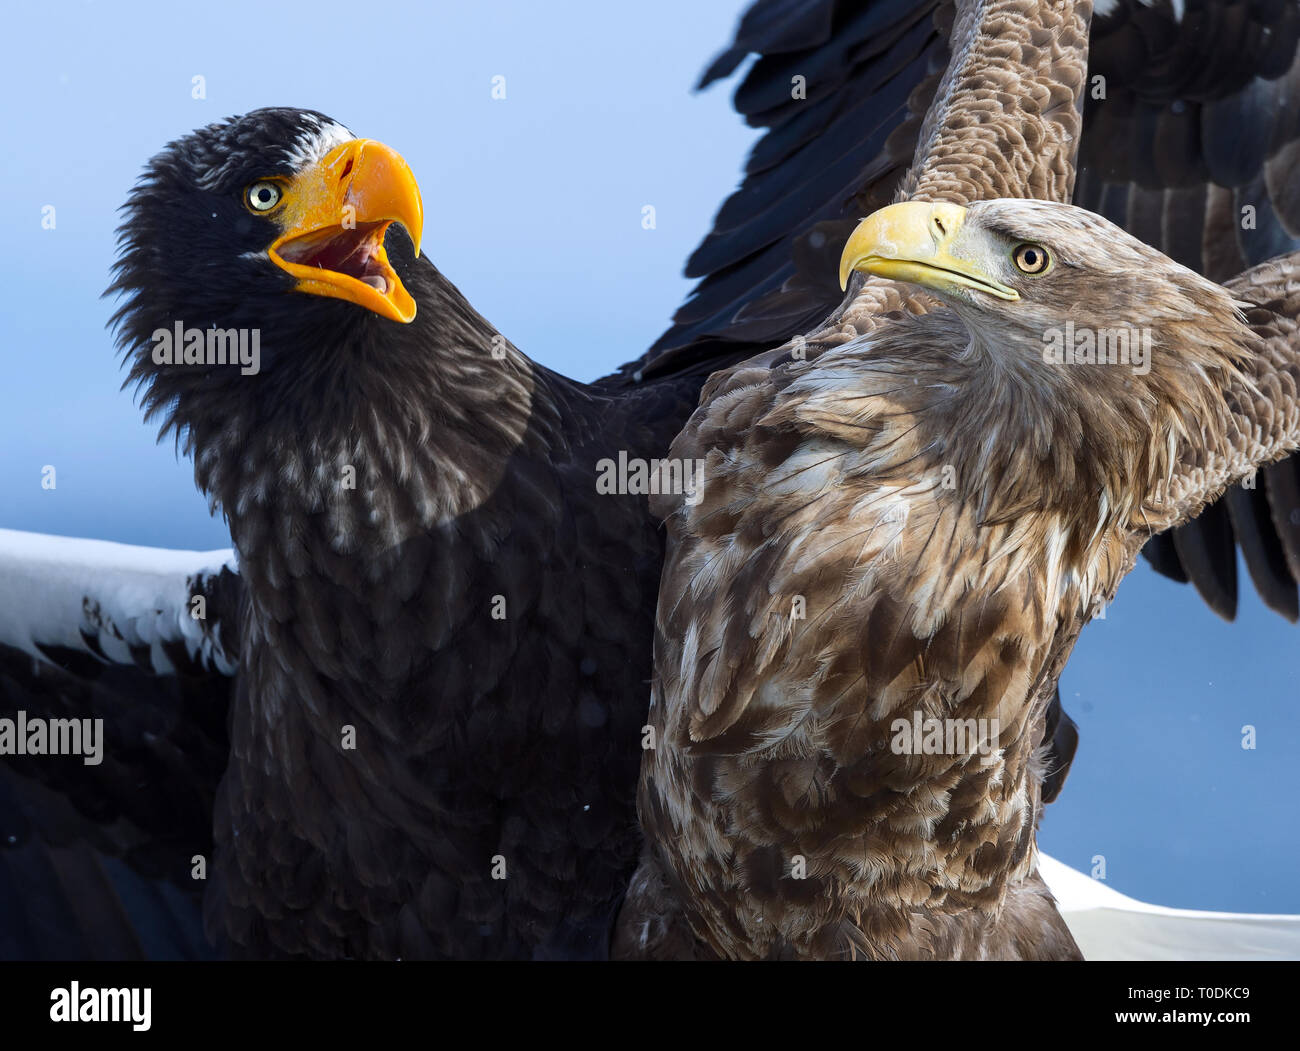 Eagles in fight. Steller's sea eagle fight vs White tailed eagle. Stock Photo